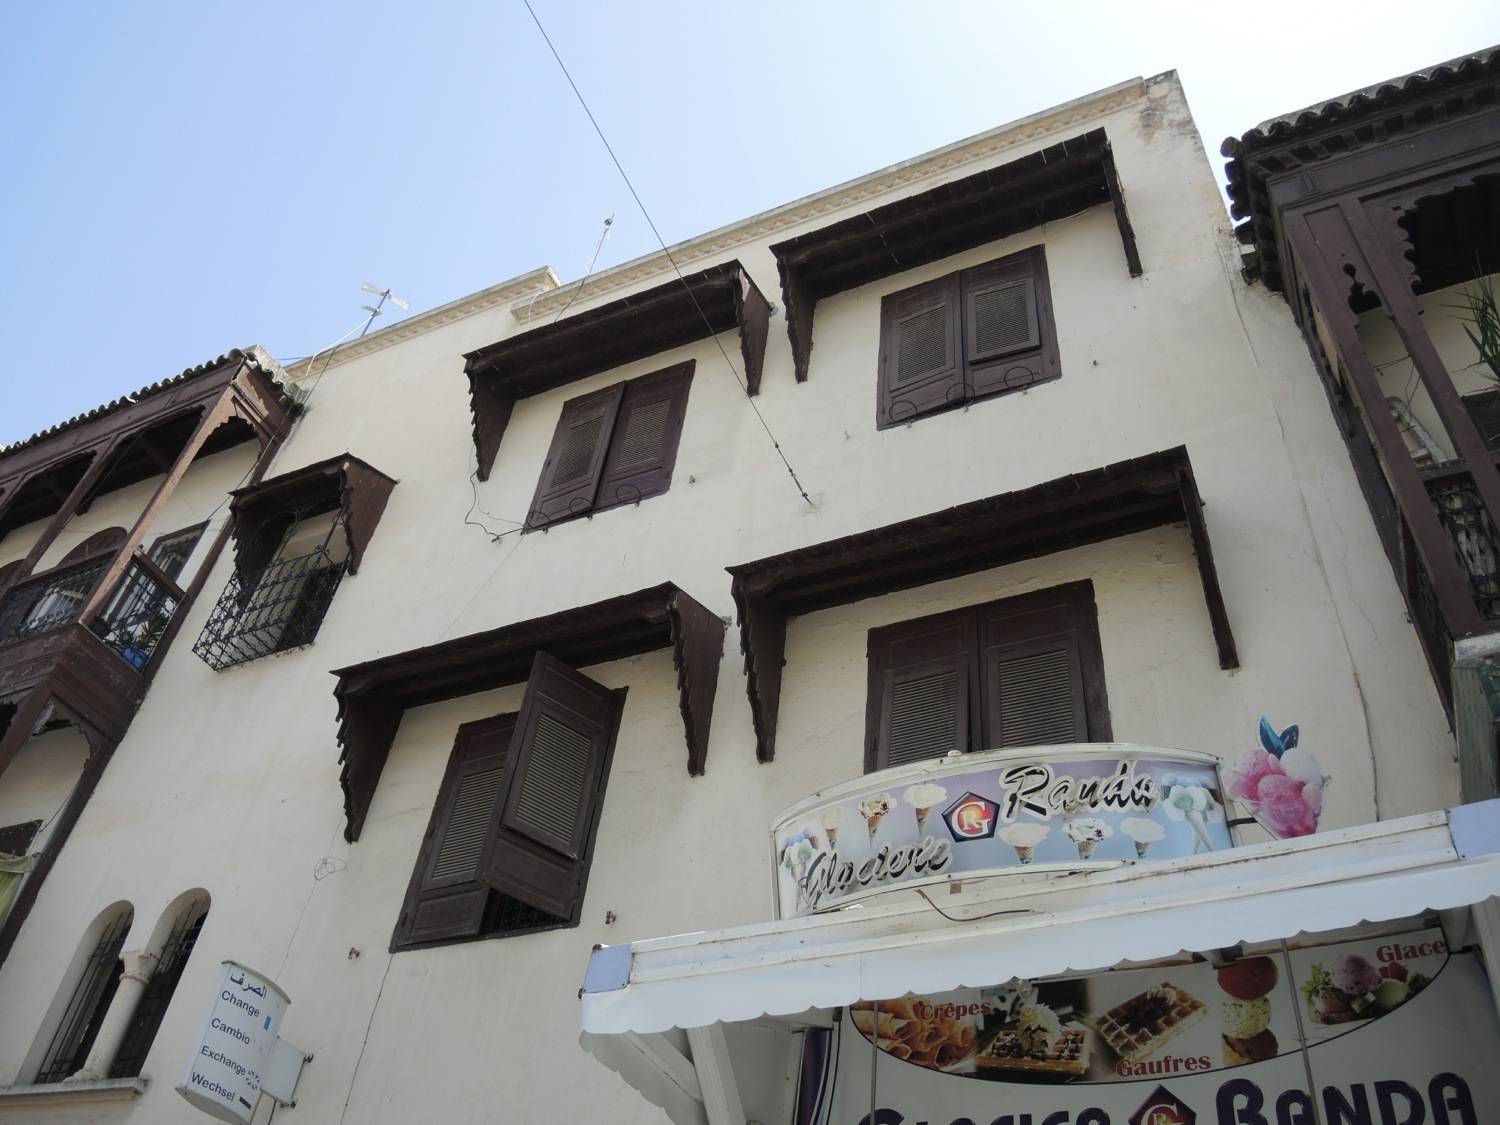 Jewish Residences of Fez - Windows on the facade on Rue Bou Ksissat